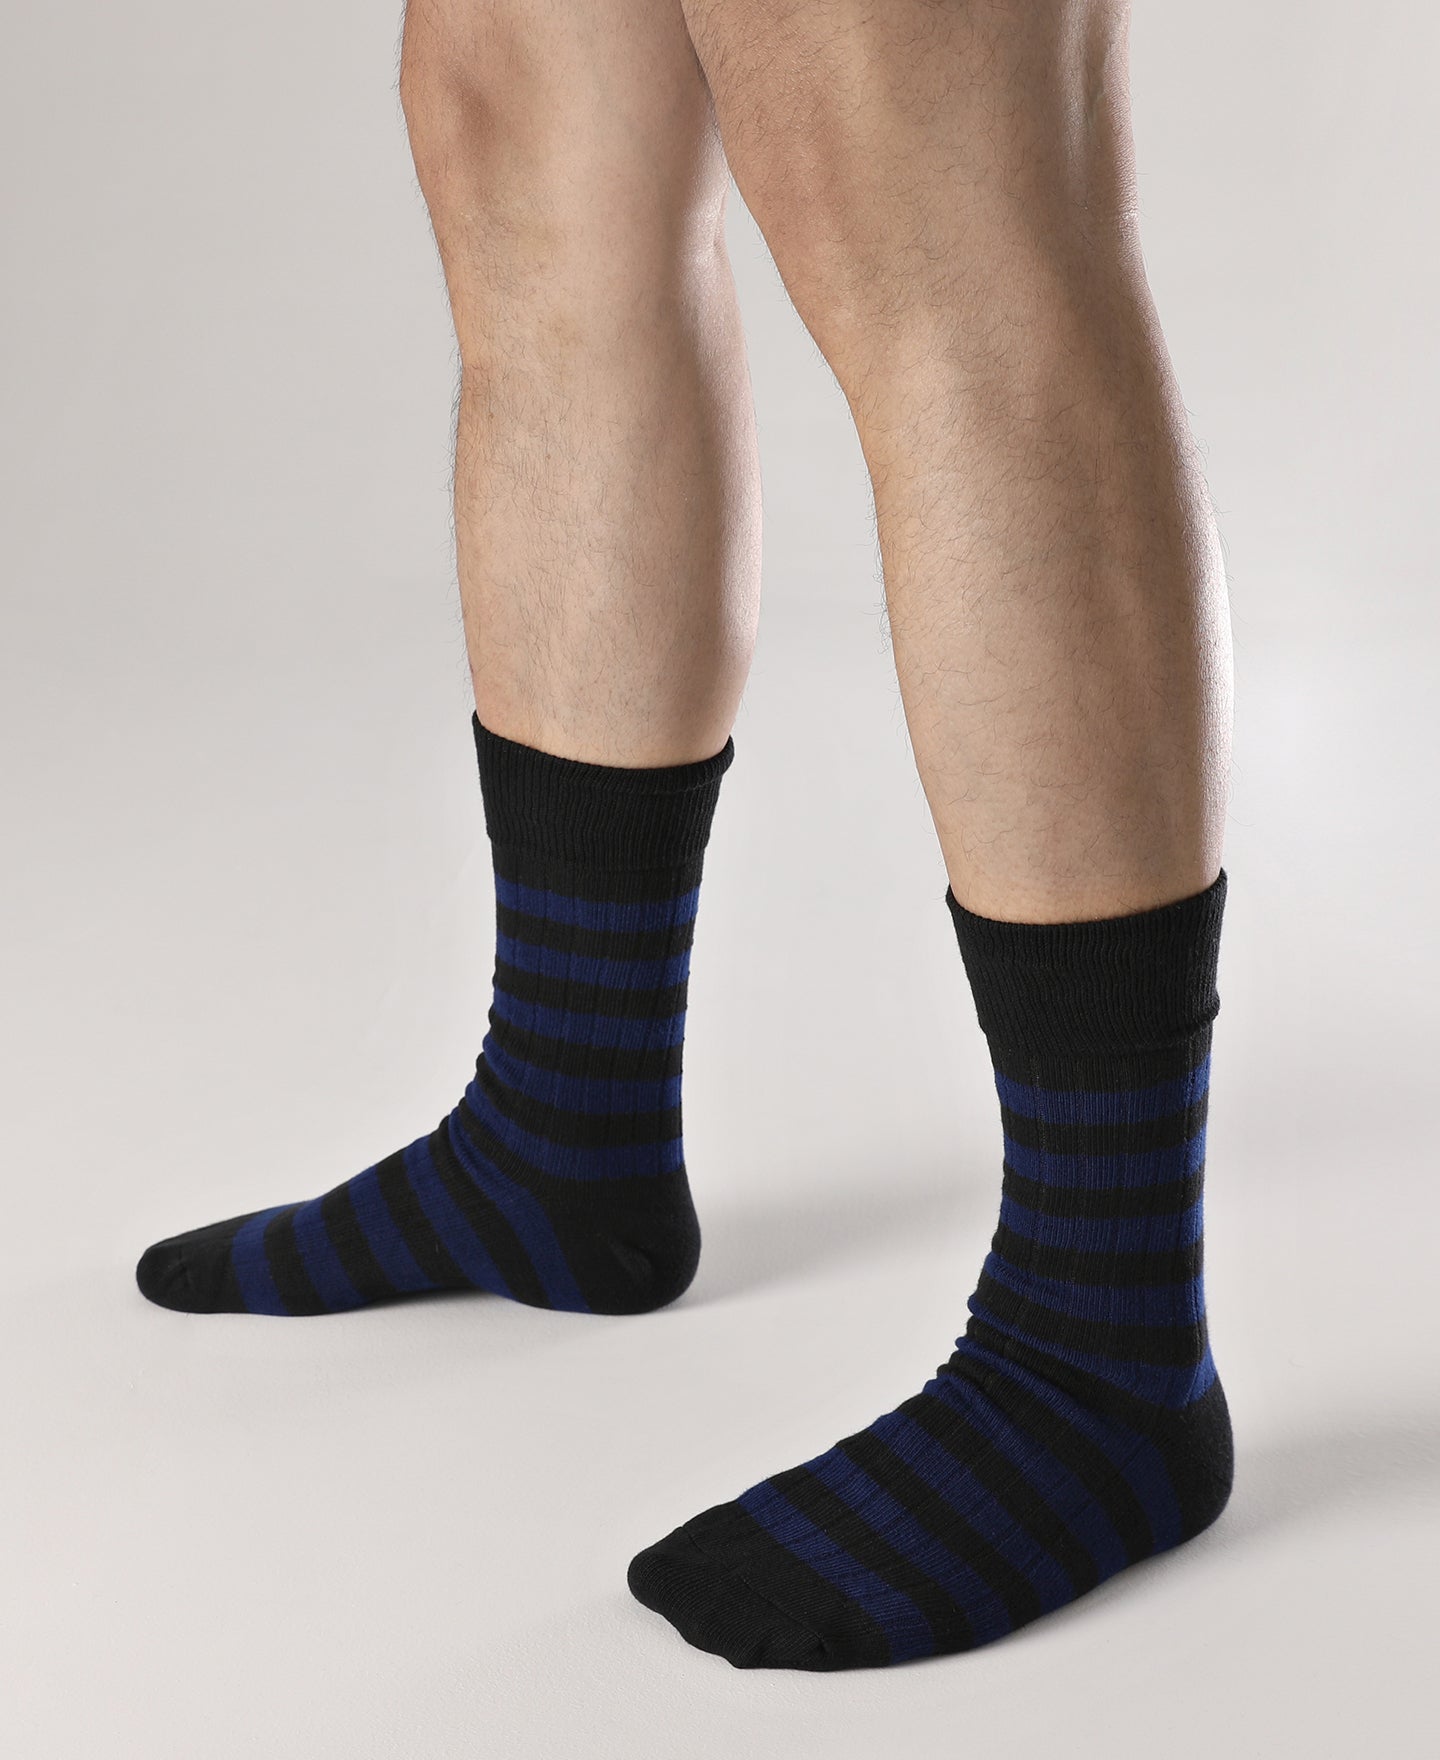 SuNi Apparel Striped Crew Socks - Retro Mens Striped Socks - Stripe Cotton  Gym Socks for Men - 4 Pairs Pack Size 10-13, Multi, Large